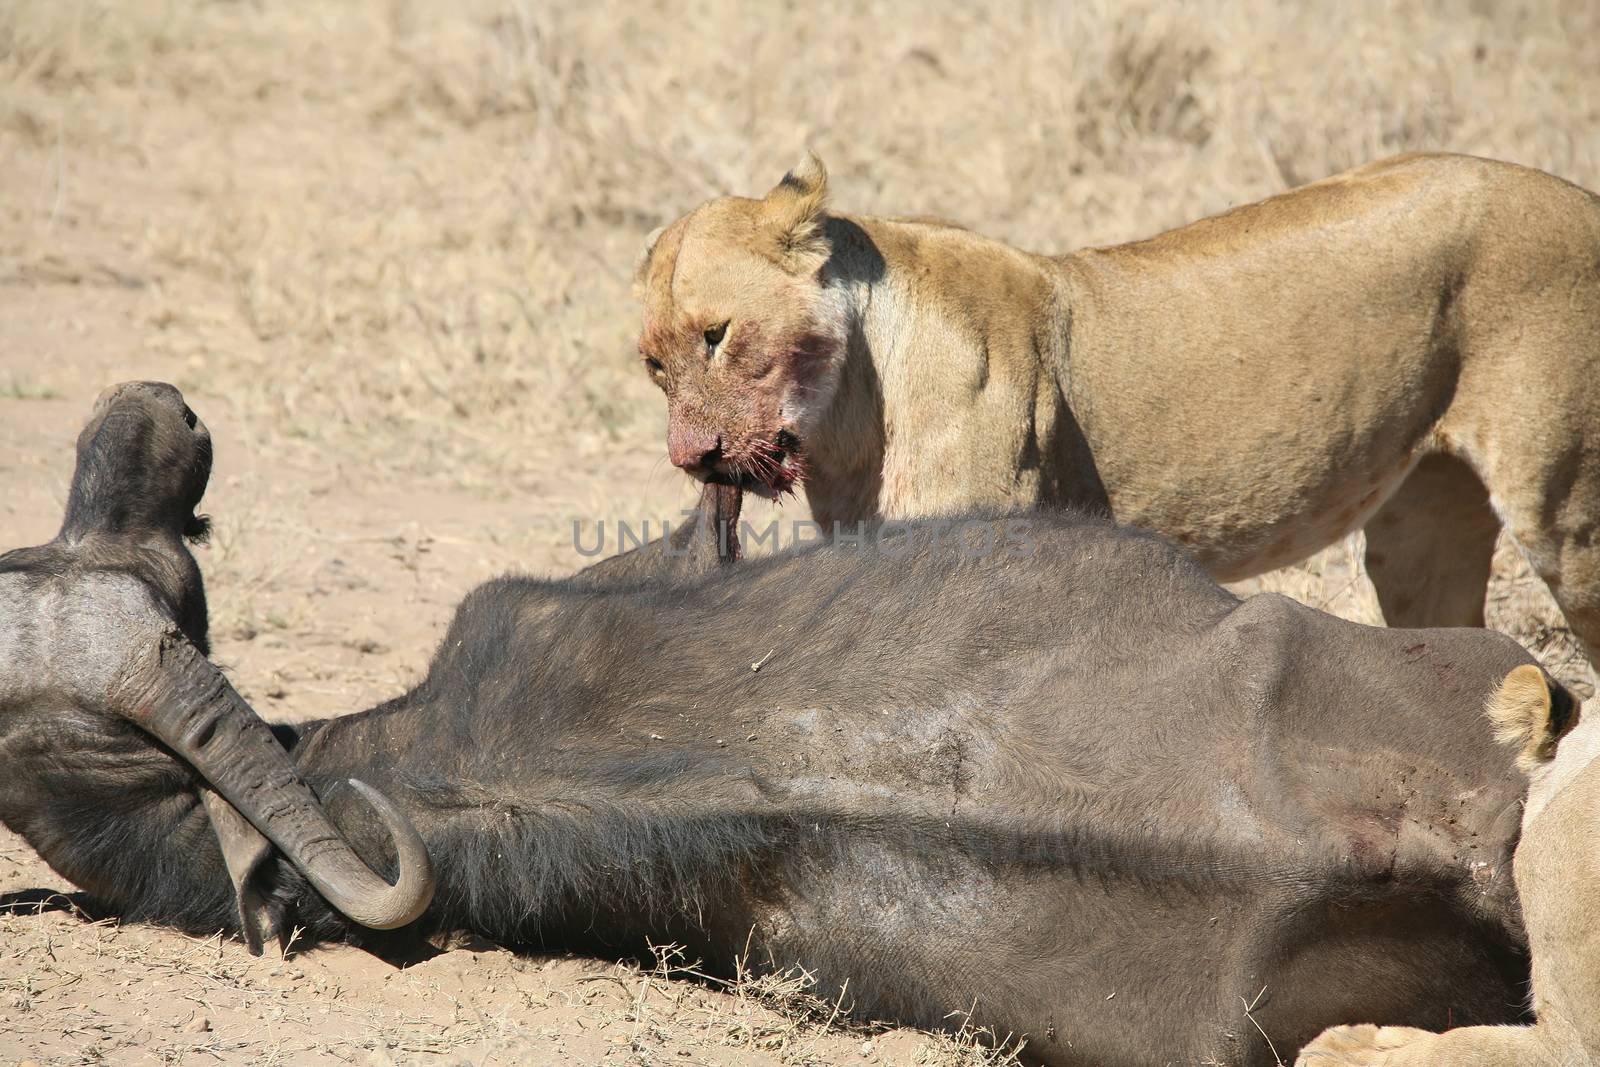 lion eating bull in blood after hunting wild dangerous mammal africa savannah Kenya by desant7474